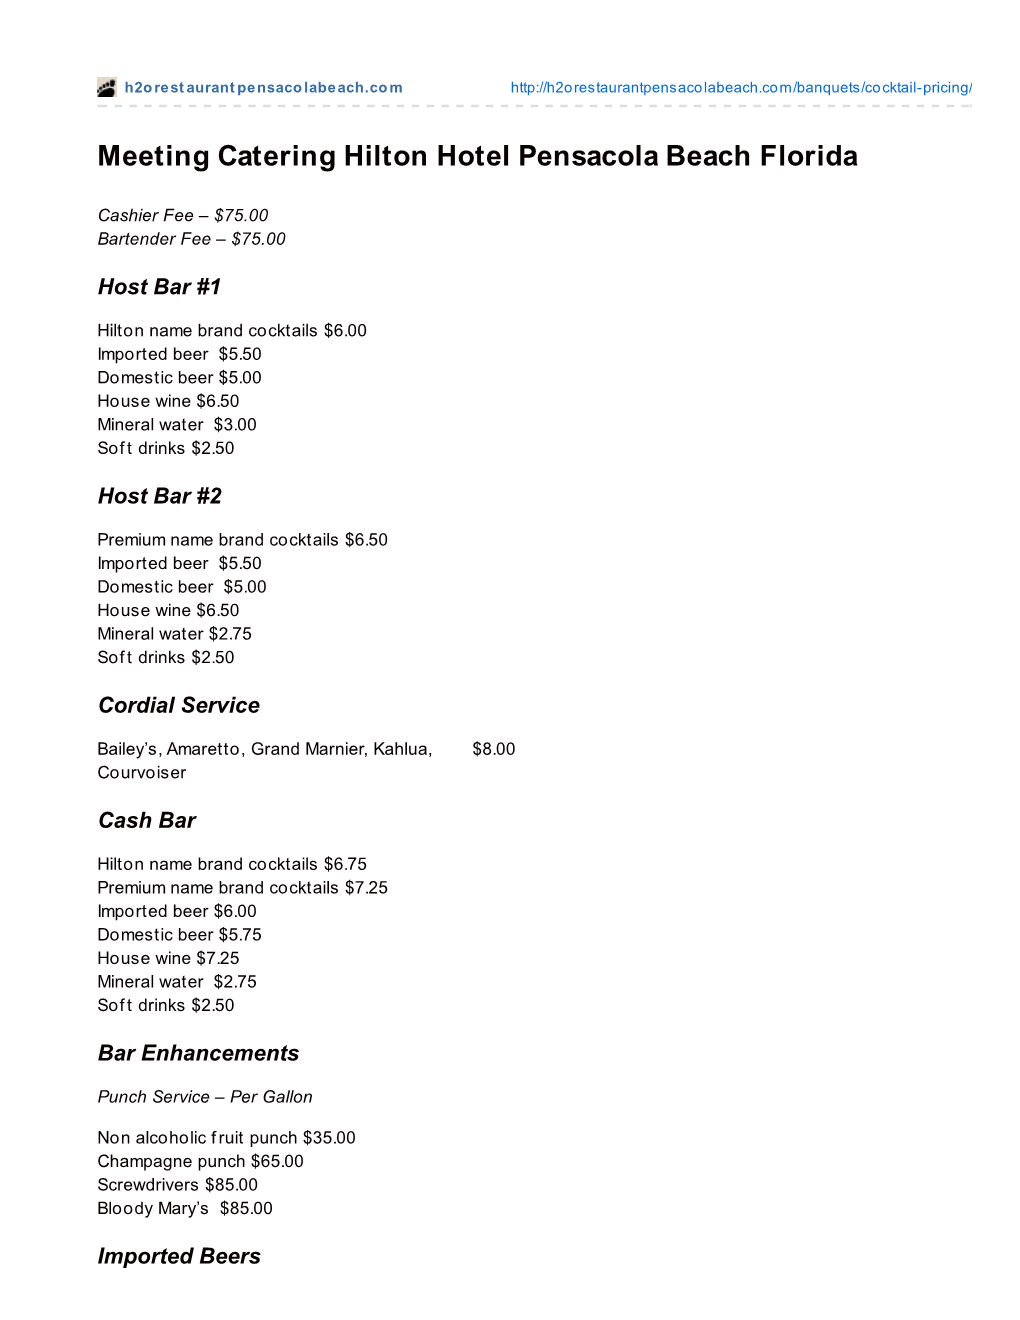 Meeting Catering Hilton Hotel Pensacola Beach Florida